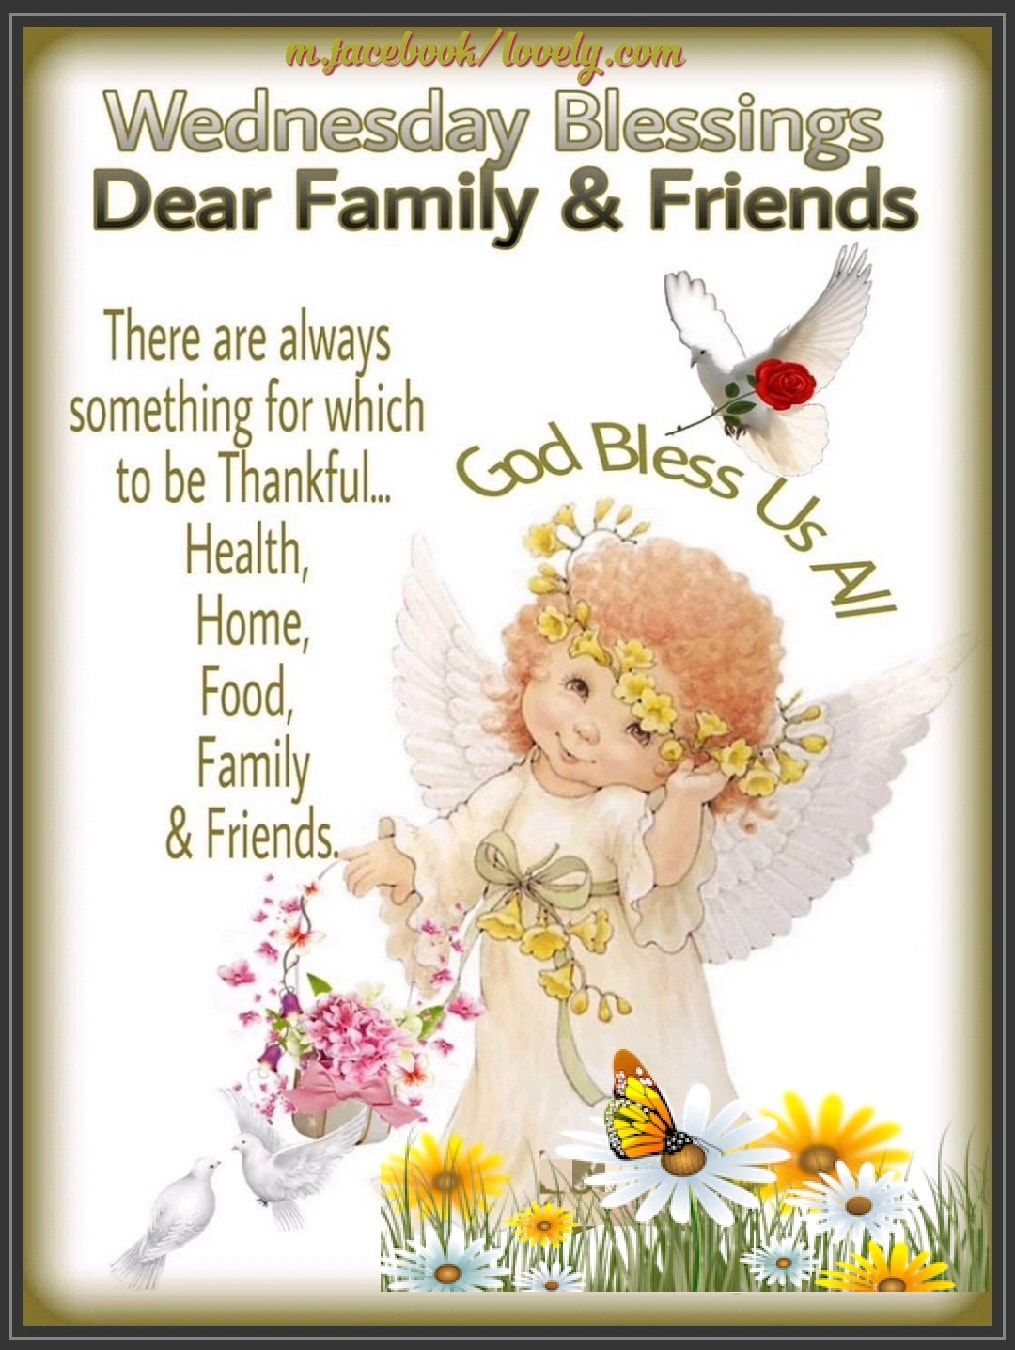 Wednesday Blessings, Dear Family & Friends